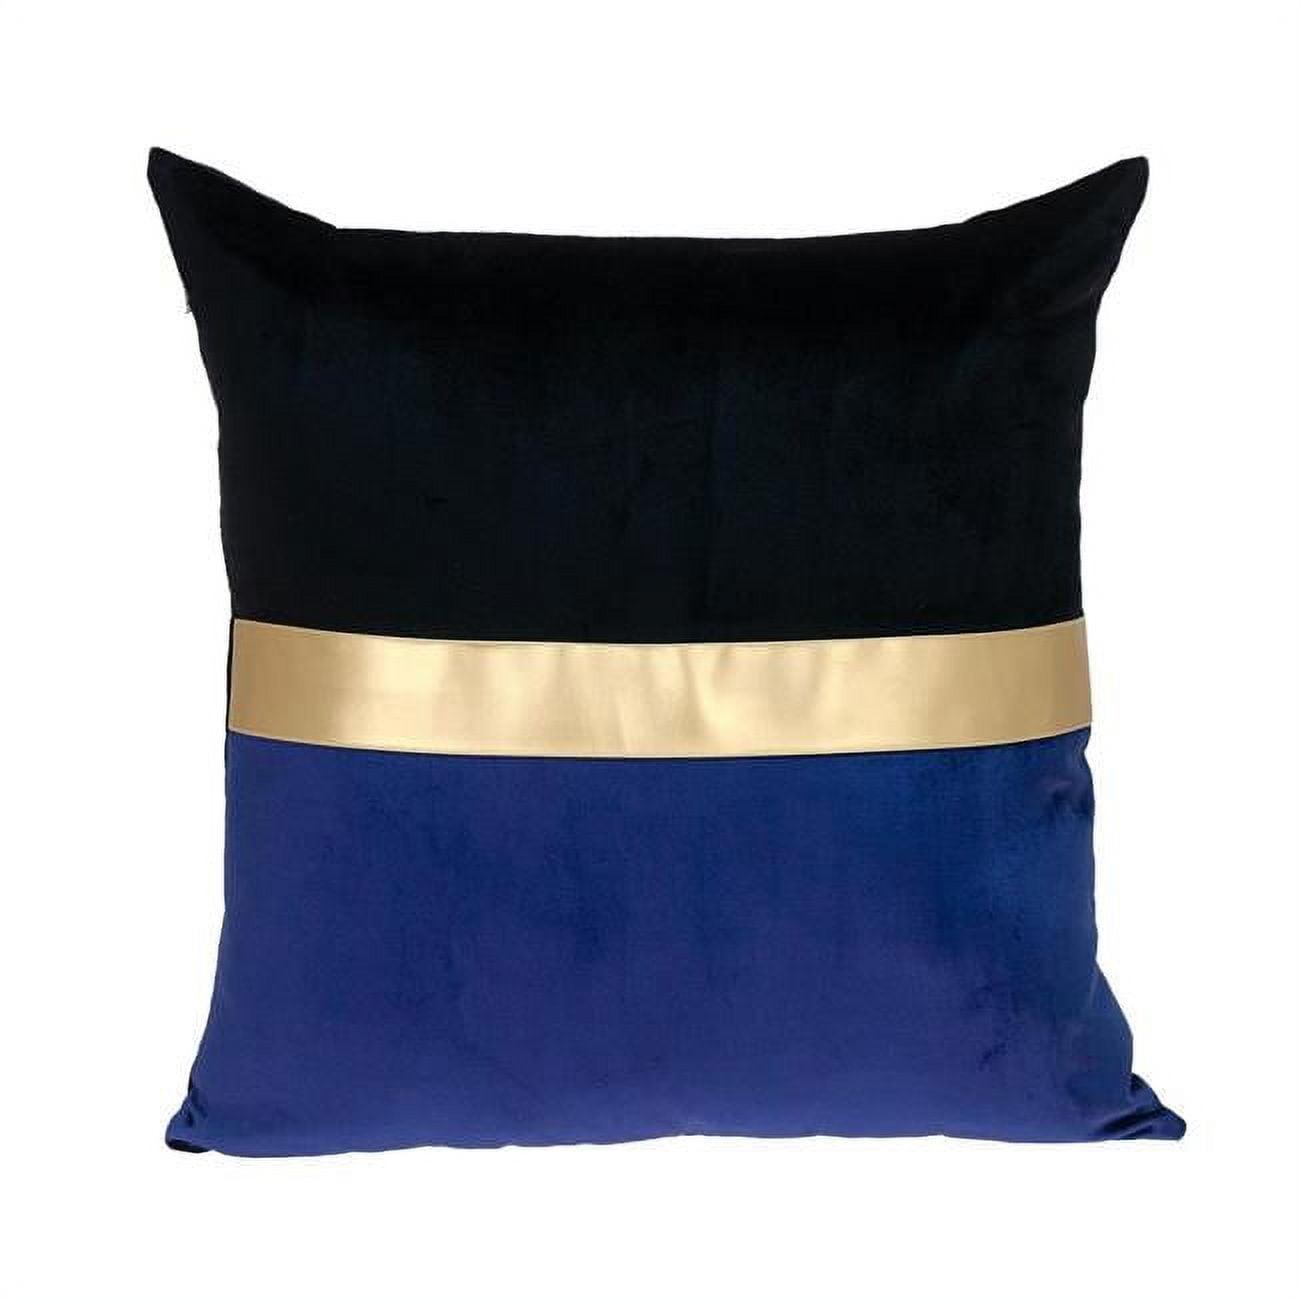 Luxurious Black, Blue, and Gold 20" Velvet Square Pillow Set